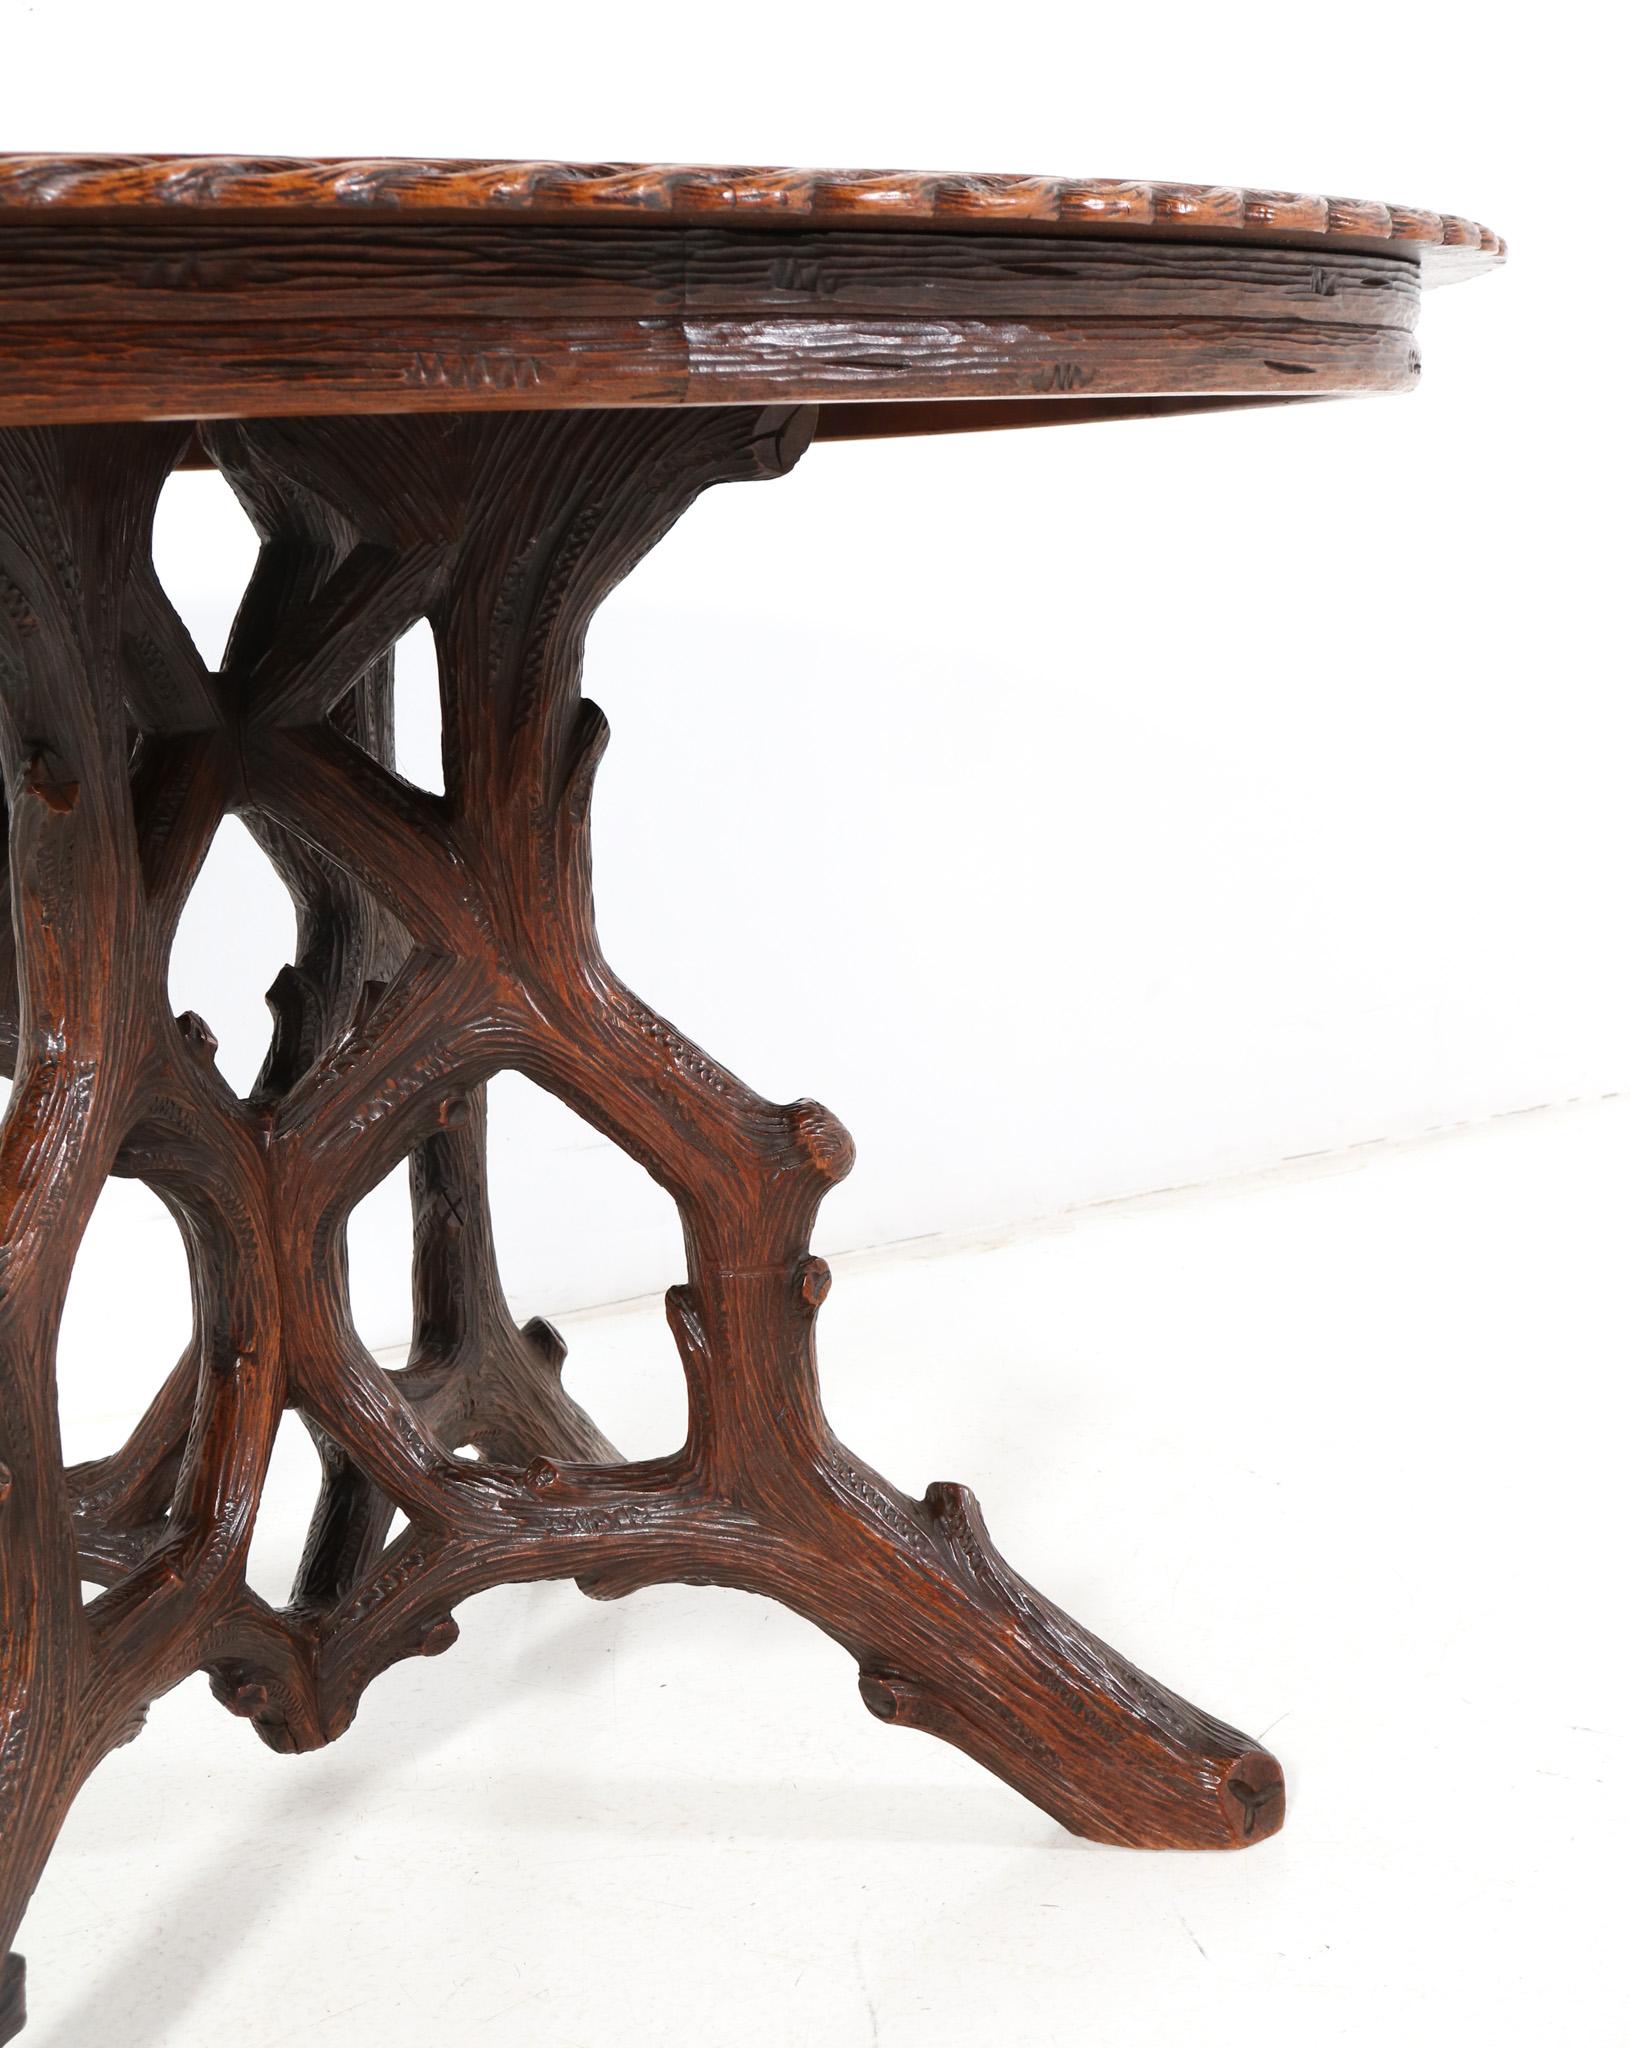 Late 19th Century Walnut Black Forest Center Table by Matthijs Horrix for Horrix Den Haag, 1890s For Sale